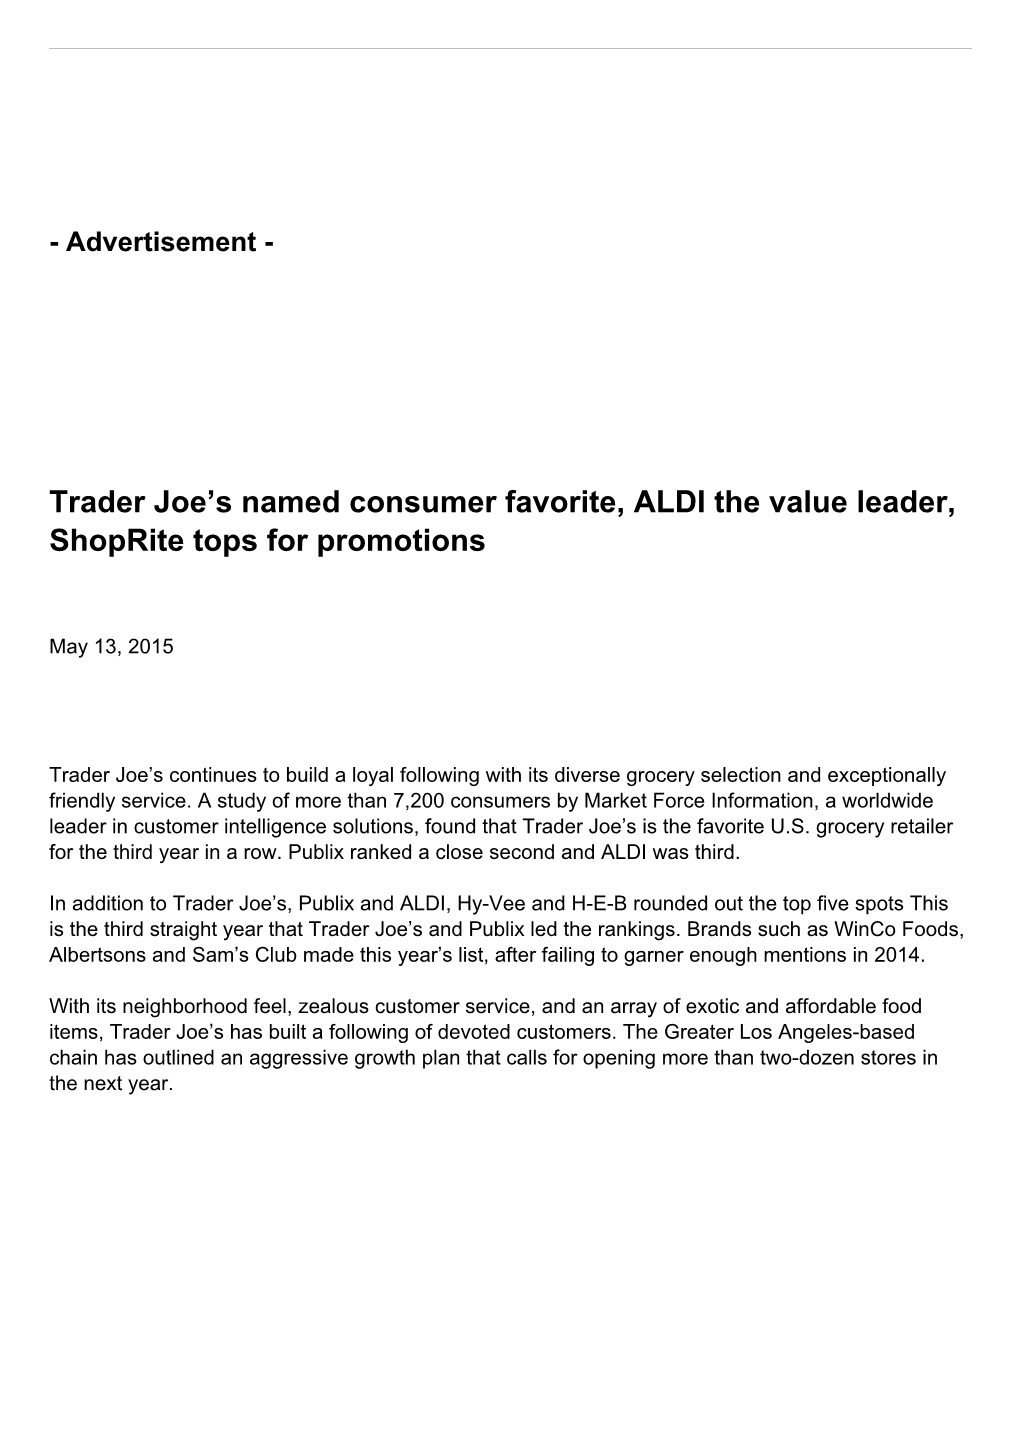 Trader Joe's Named Consumer Favorite, ALDI the Value Leader, Shoprite Tops for Promotions